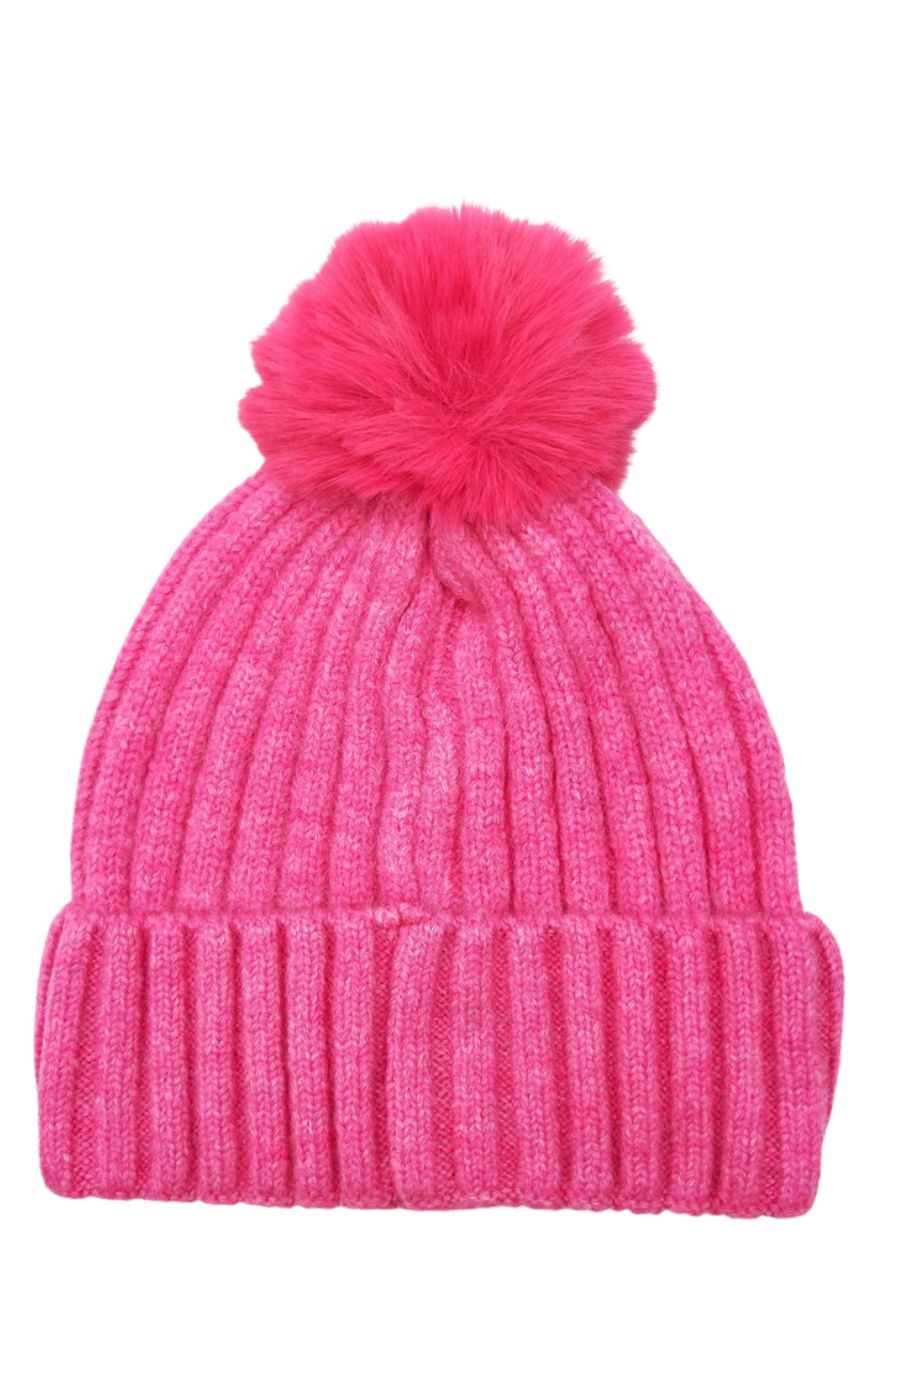 PomPom Hat in Pink